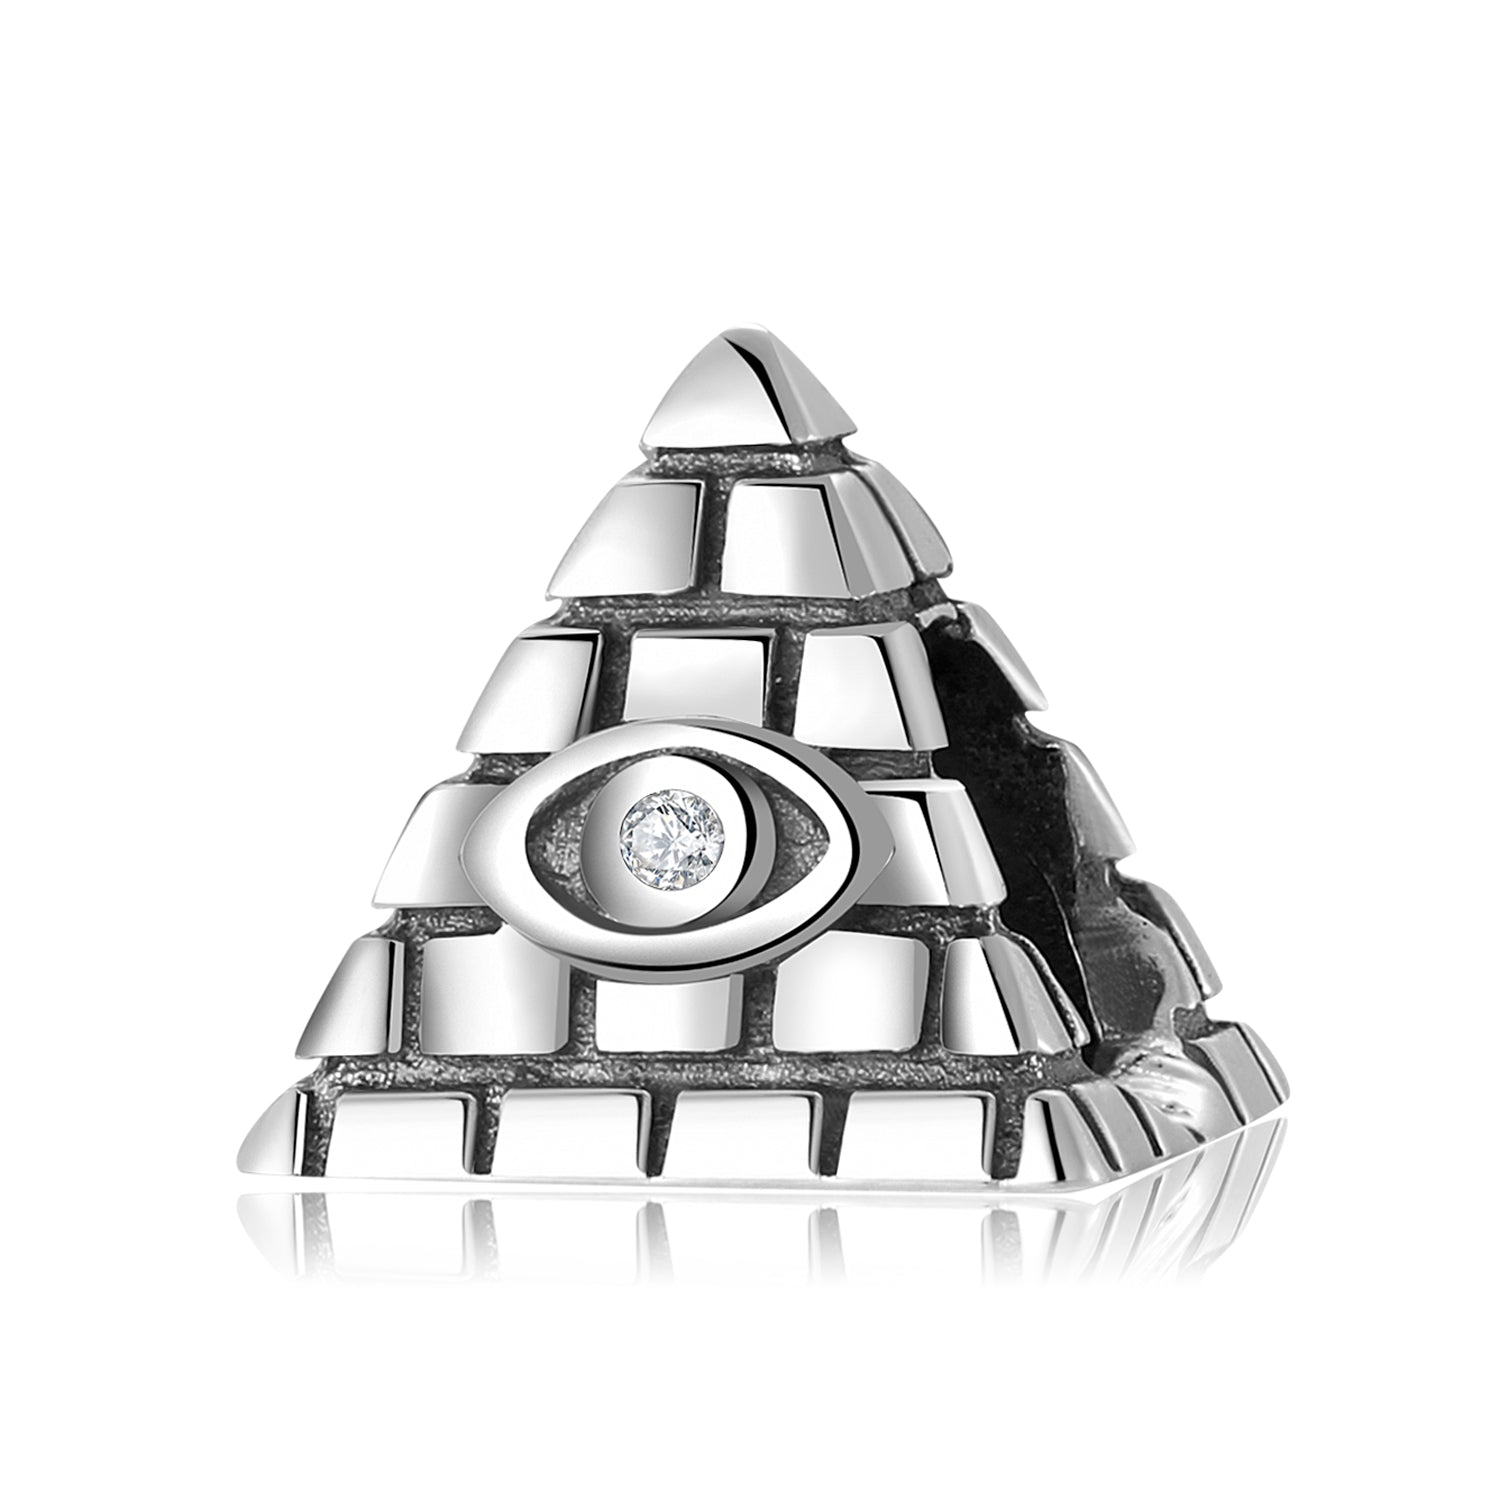 Pyramid "Eye of Providence"